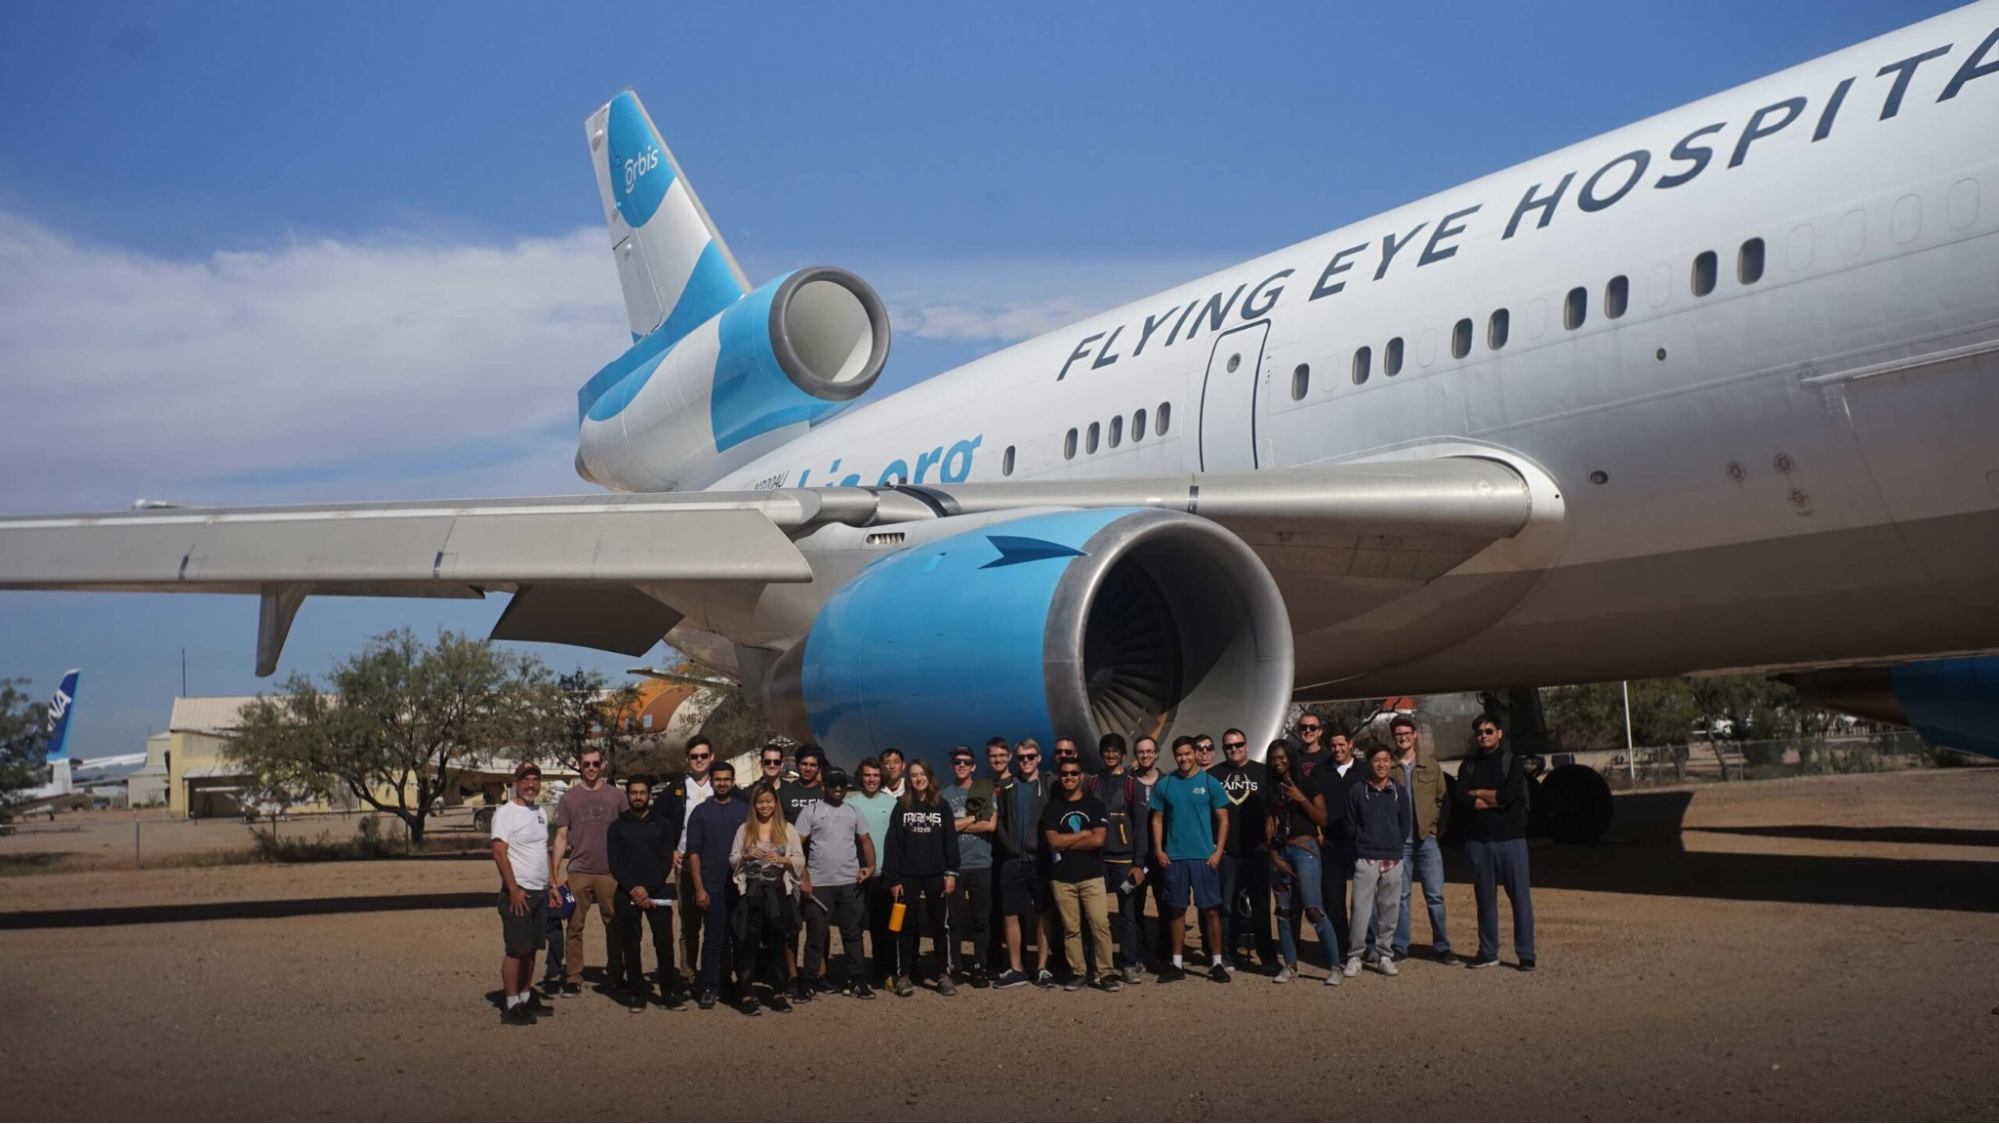 Museum visitors gathered around an airplane